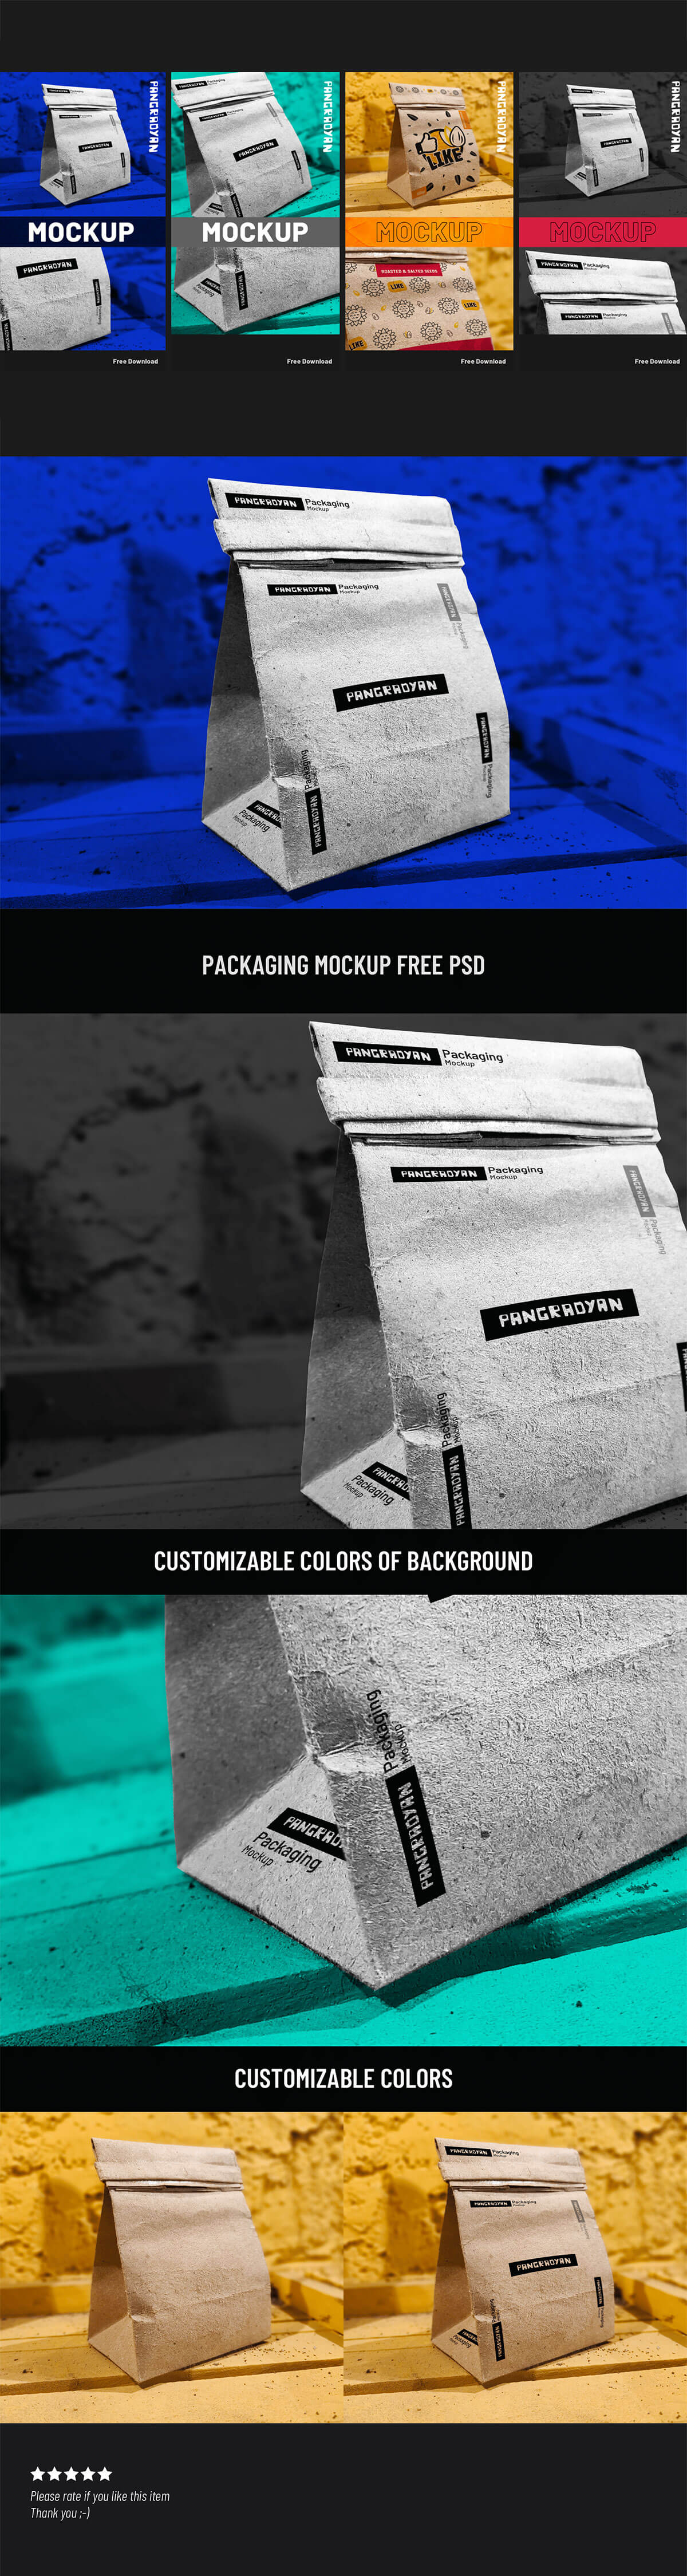 Free Packaging Mockup PSD